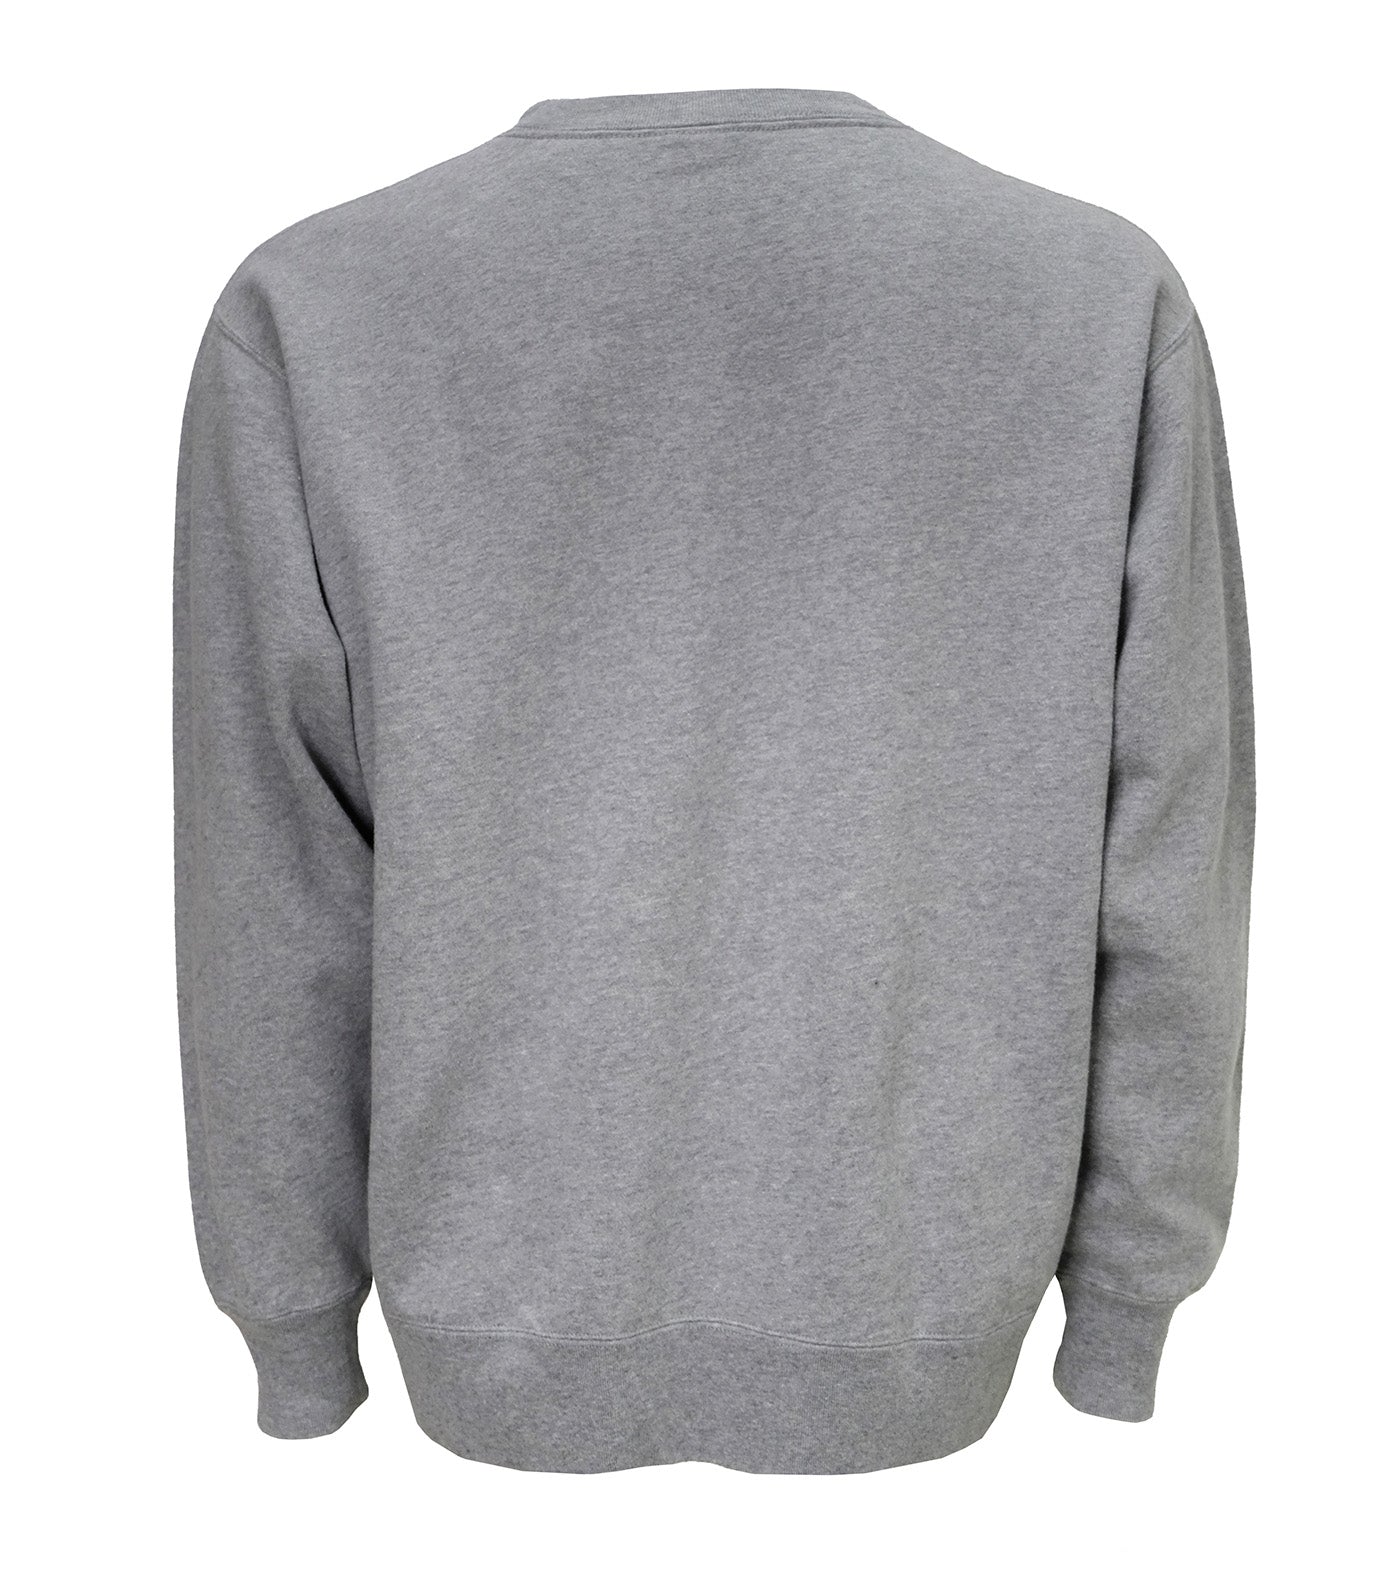 Japan Line Crewneck Sweatshirt Oxford Gray